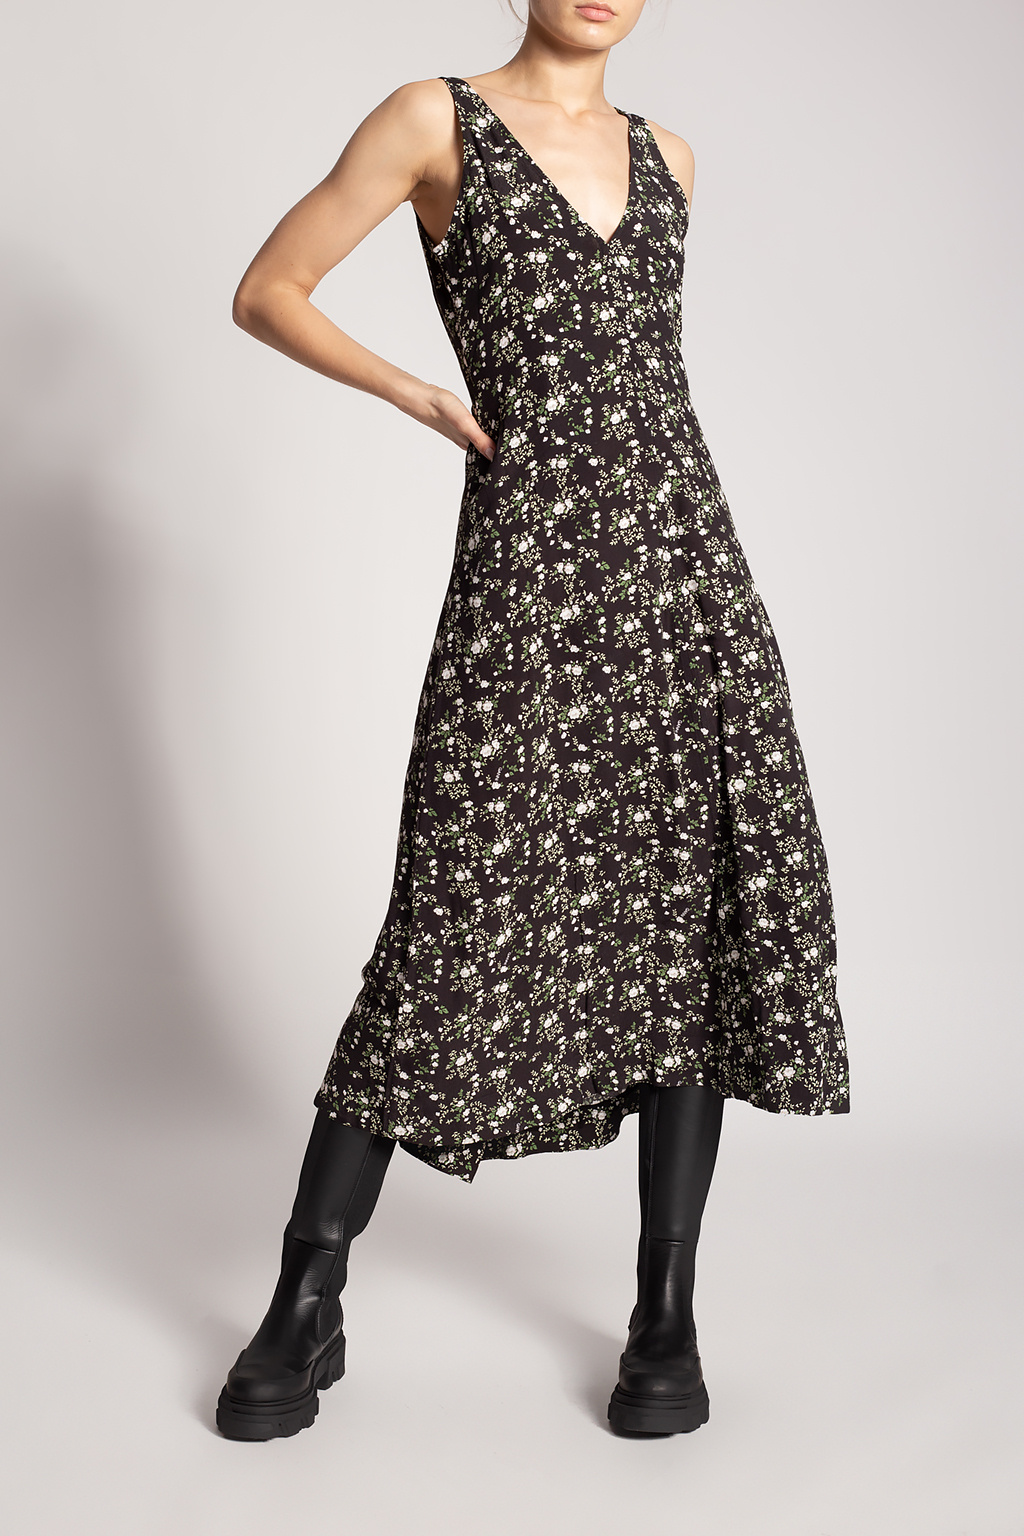 Ganni Floral print dress | Women's ...